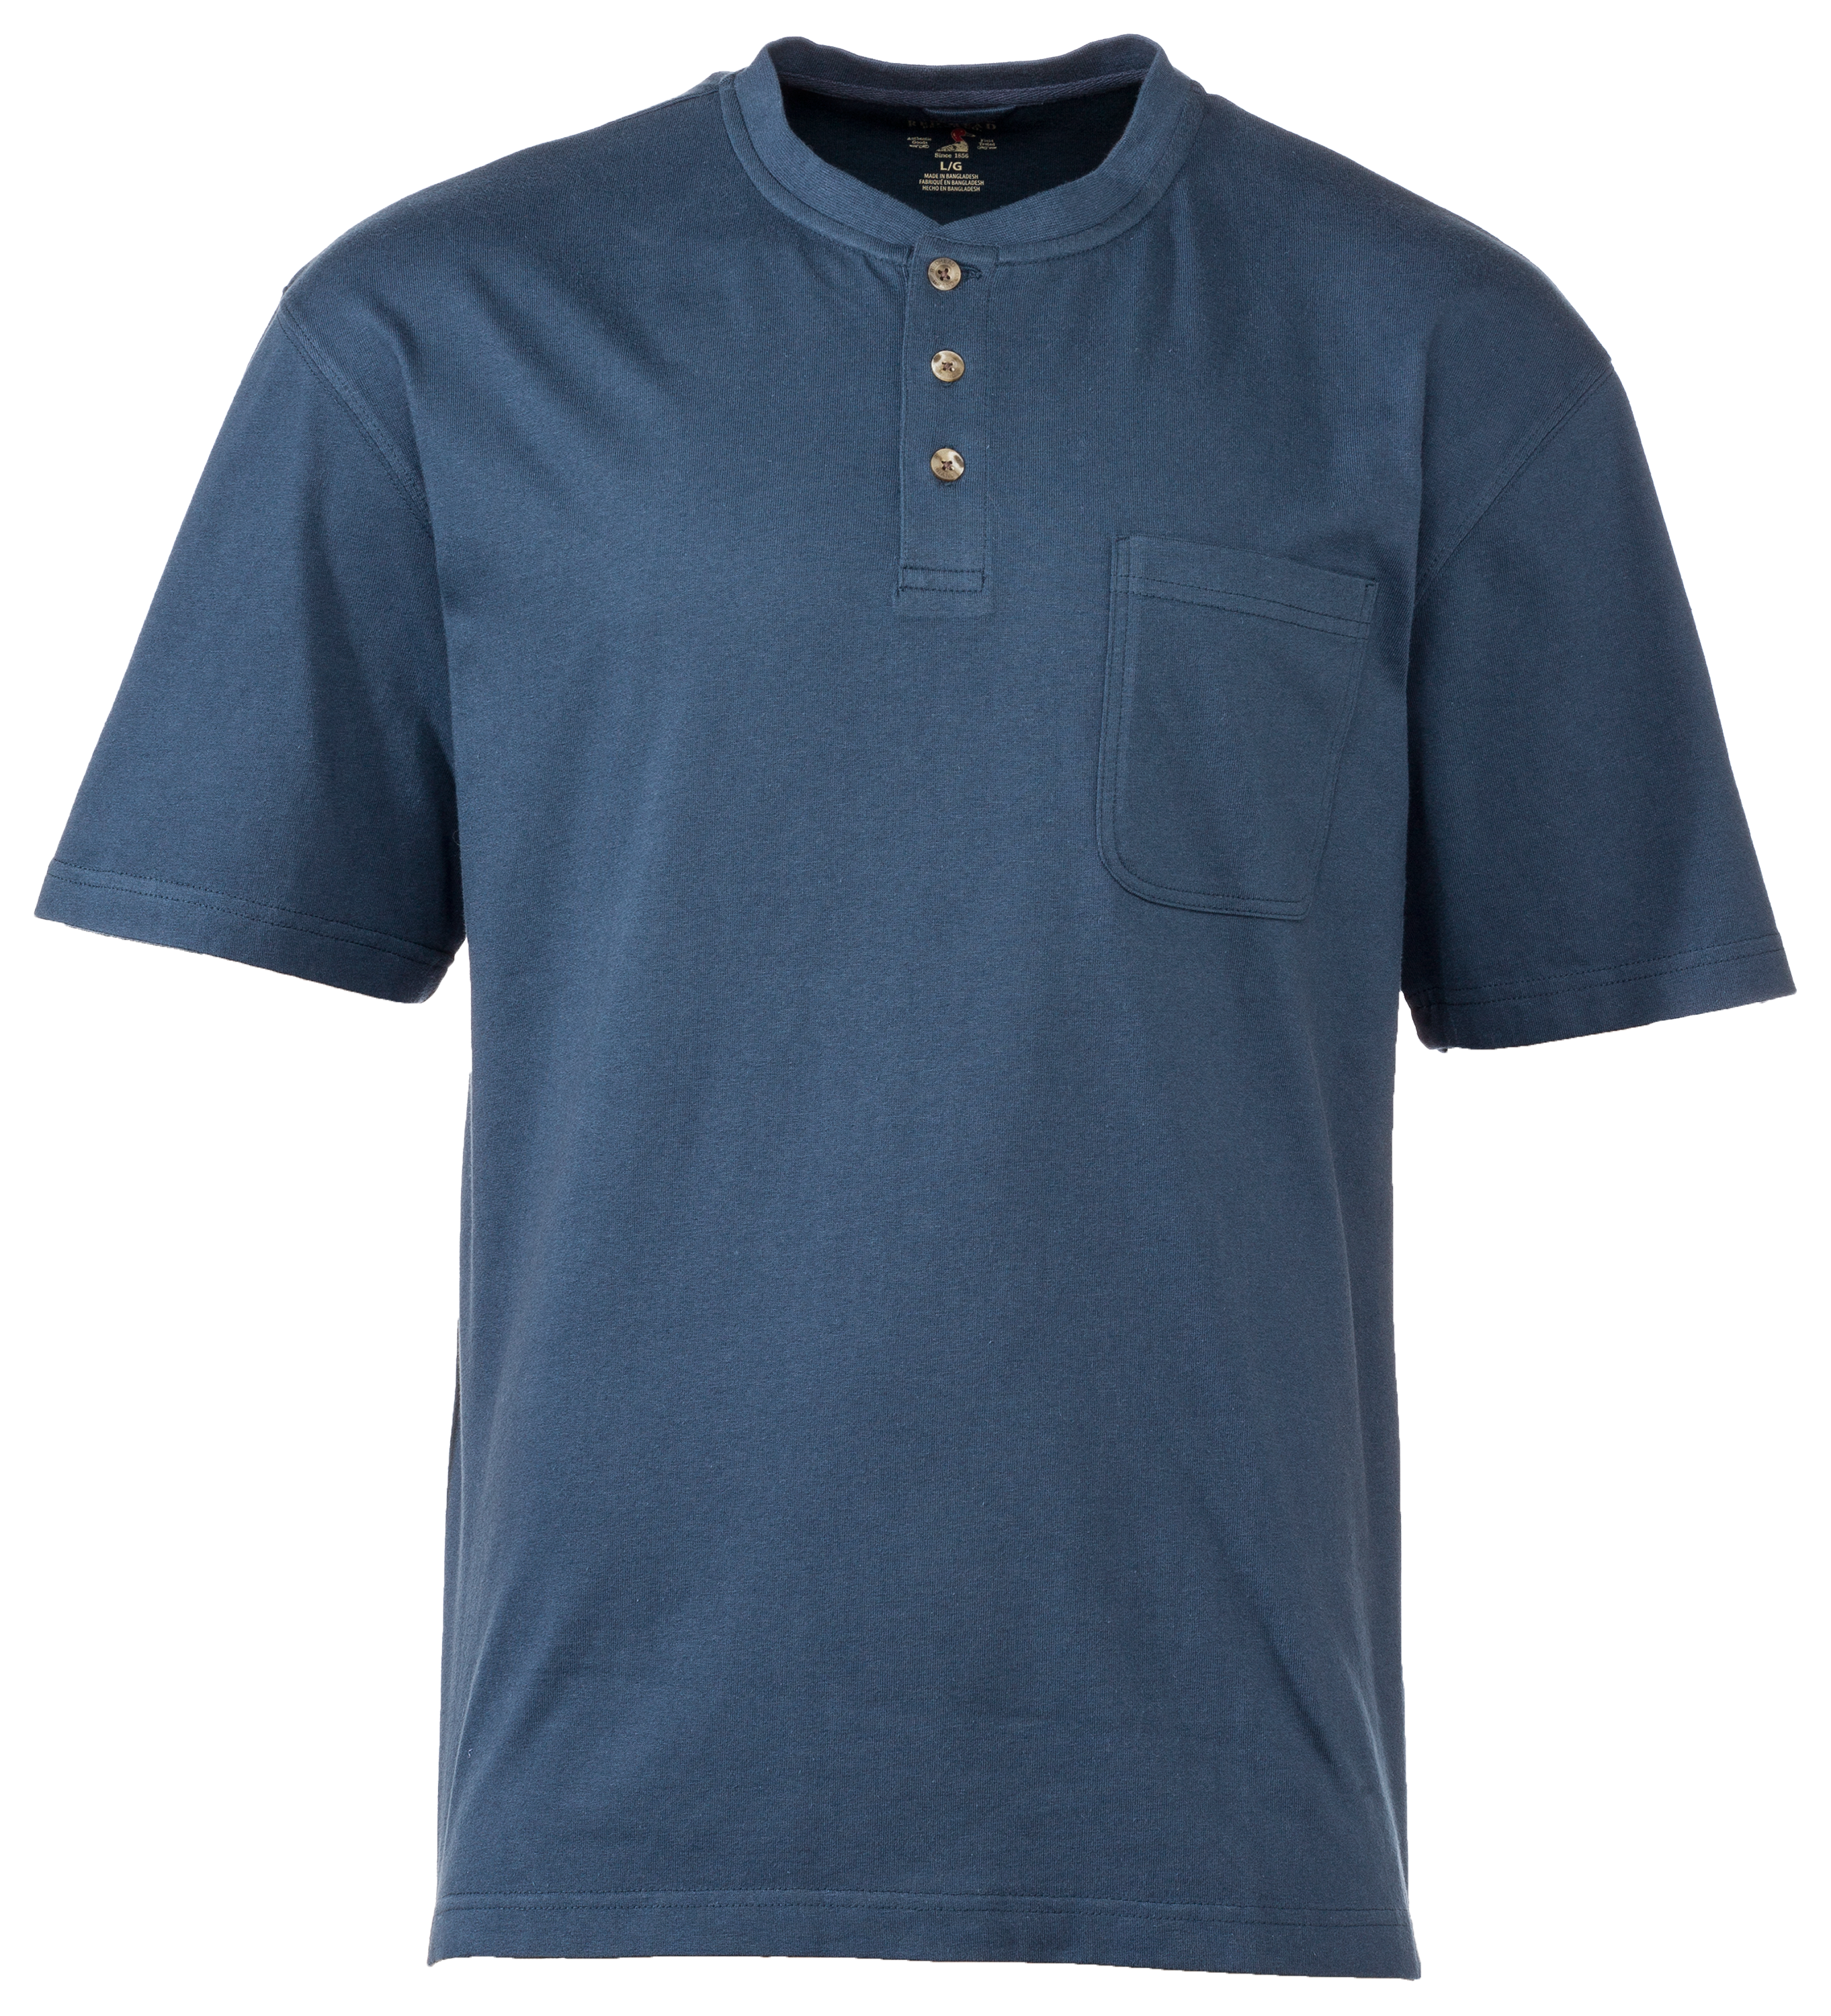 RedHead Henley Pocket Short-Sleeve Shirt for Men - Cadet Blue - 5XL